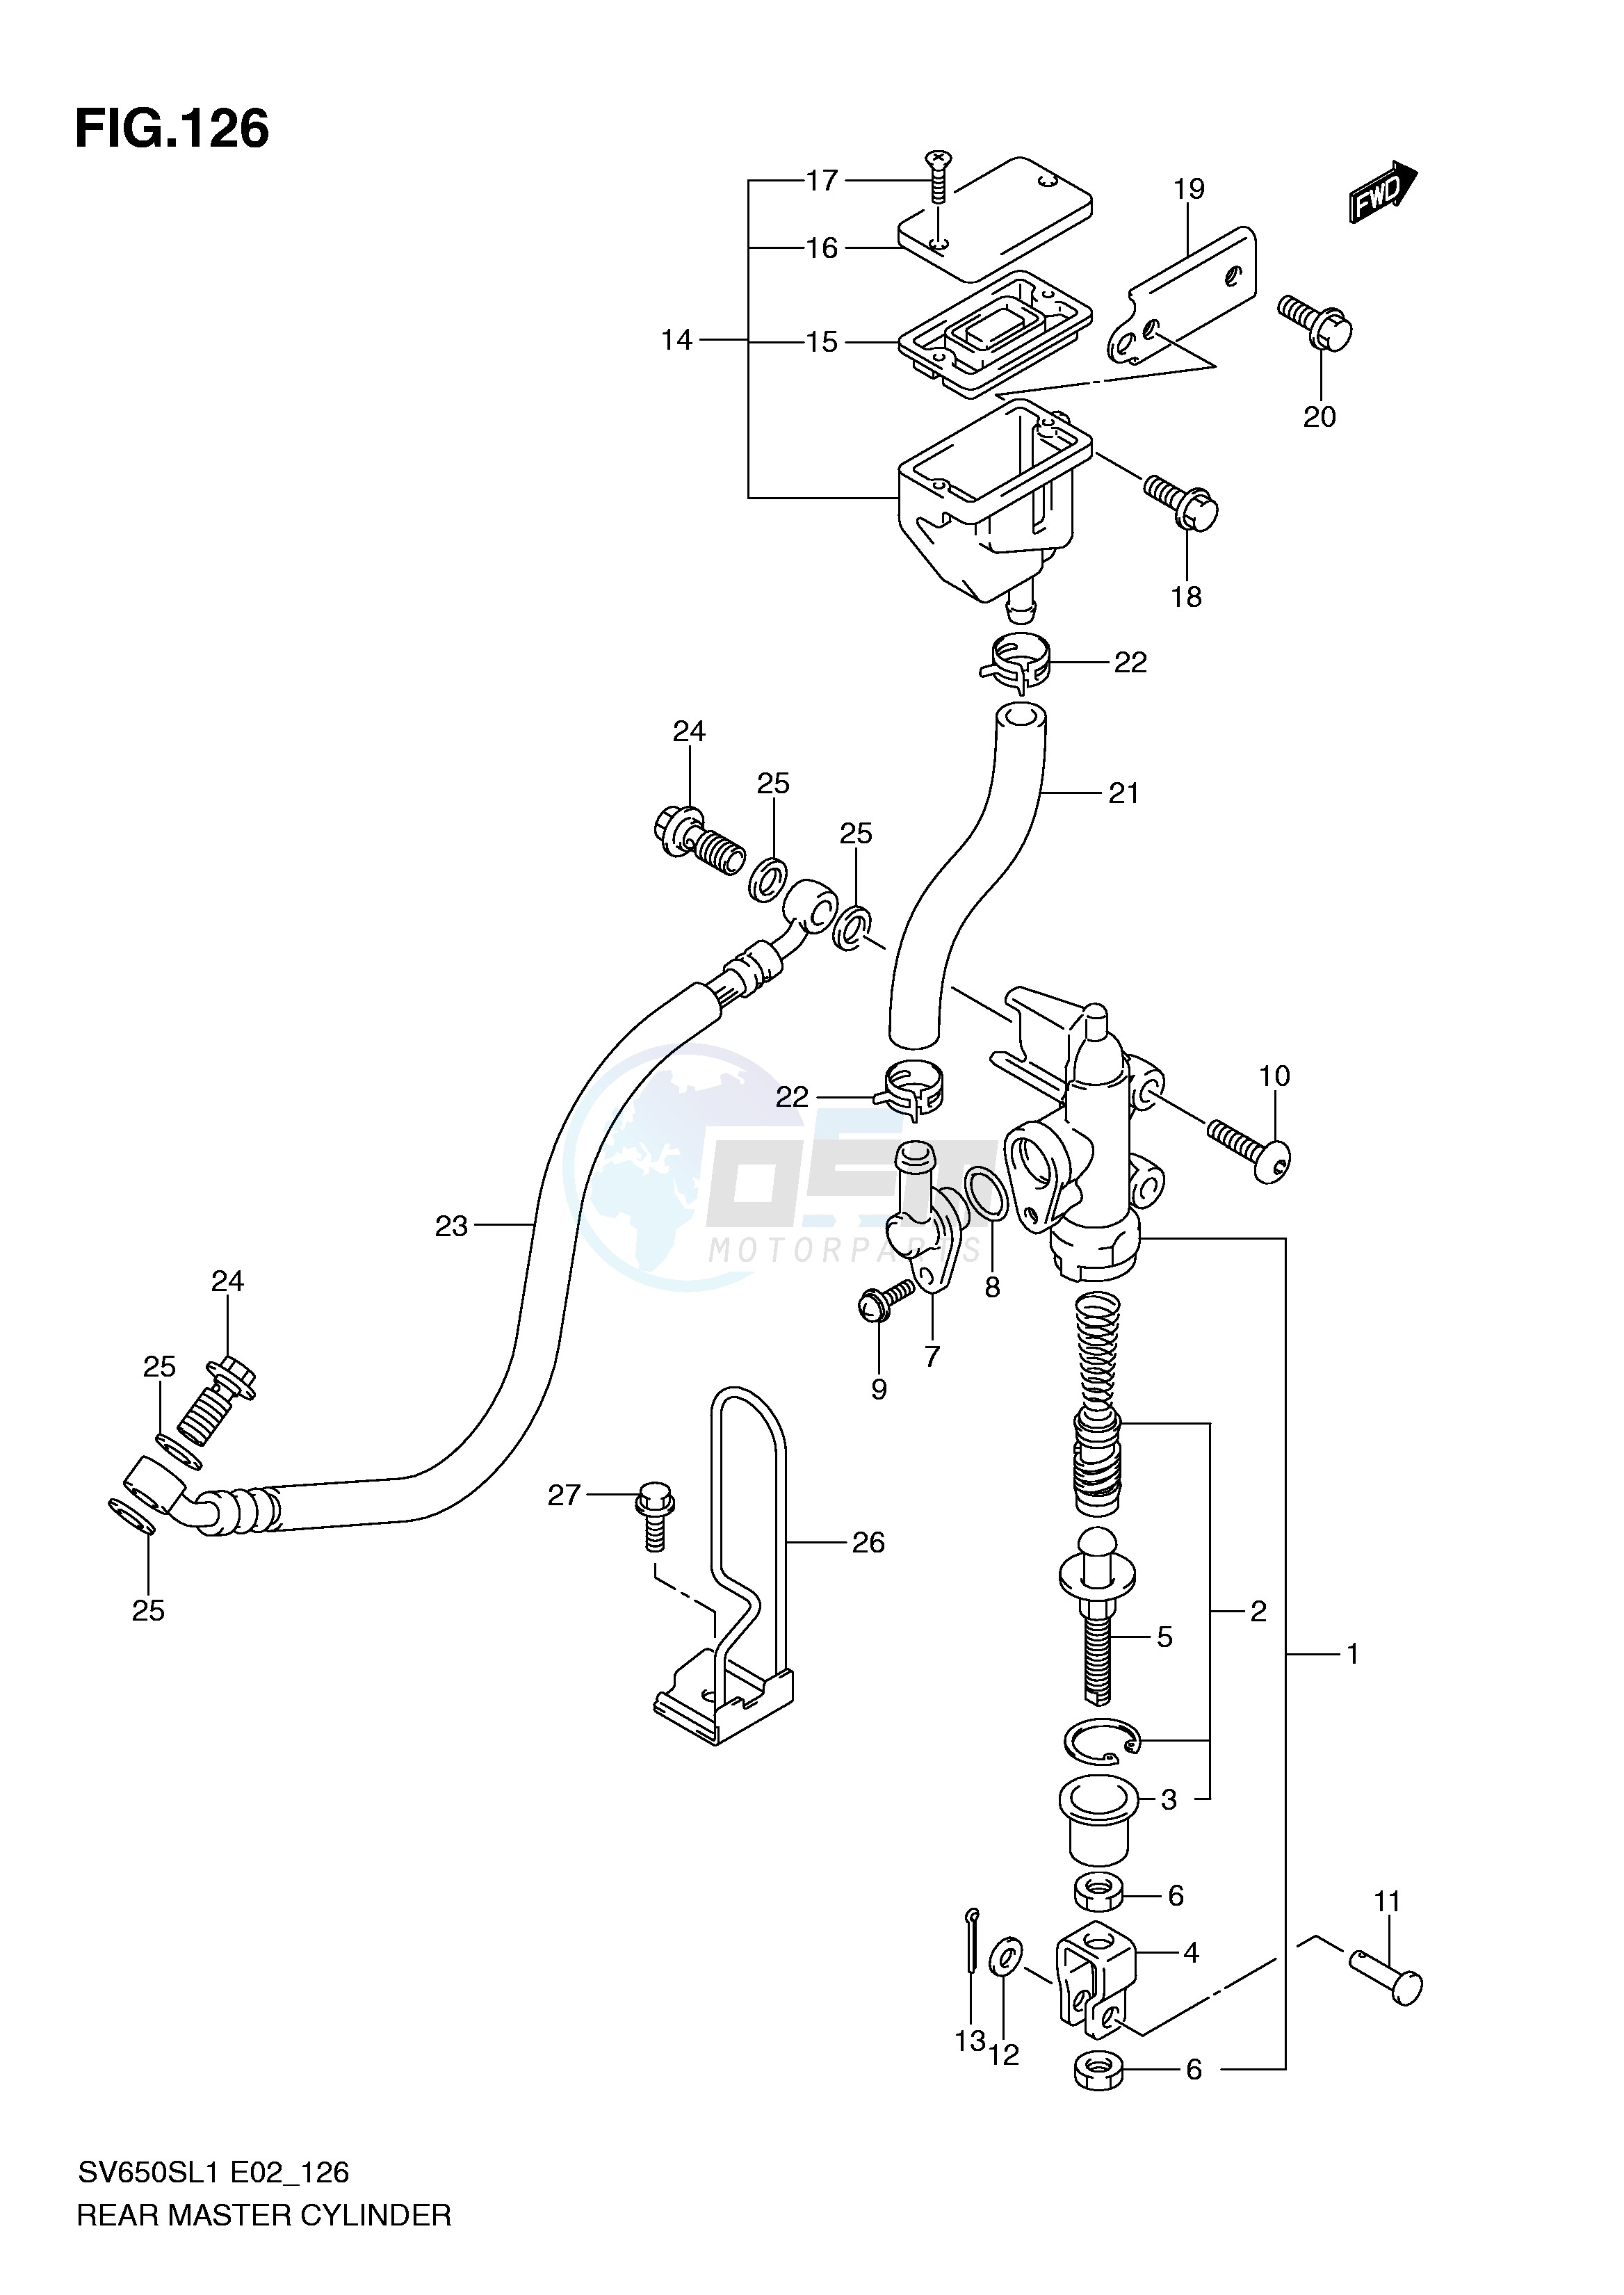 REAR MASTER CYLINDER (SV650SL1 E2) blueprint